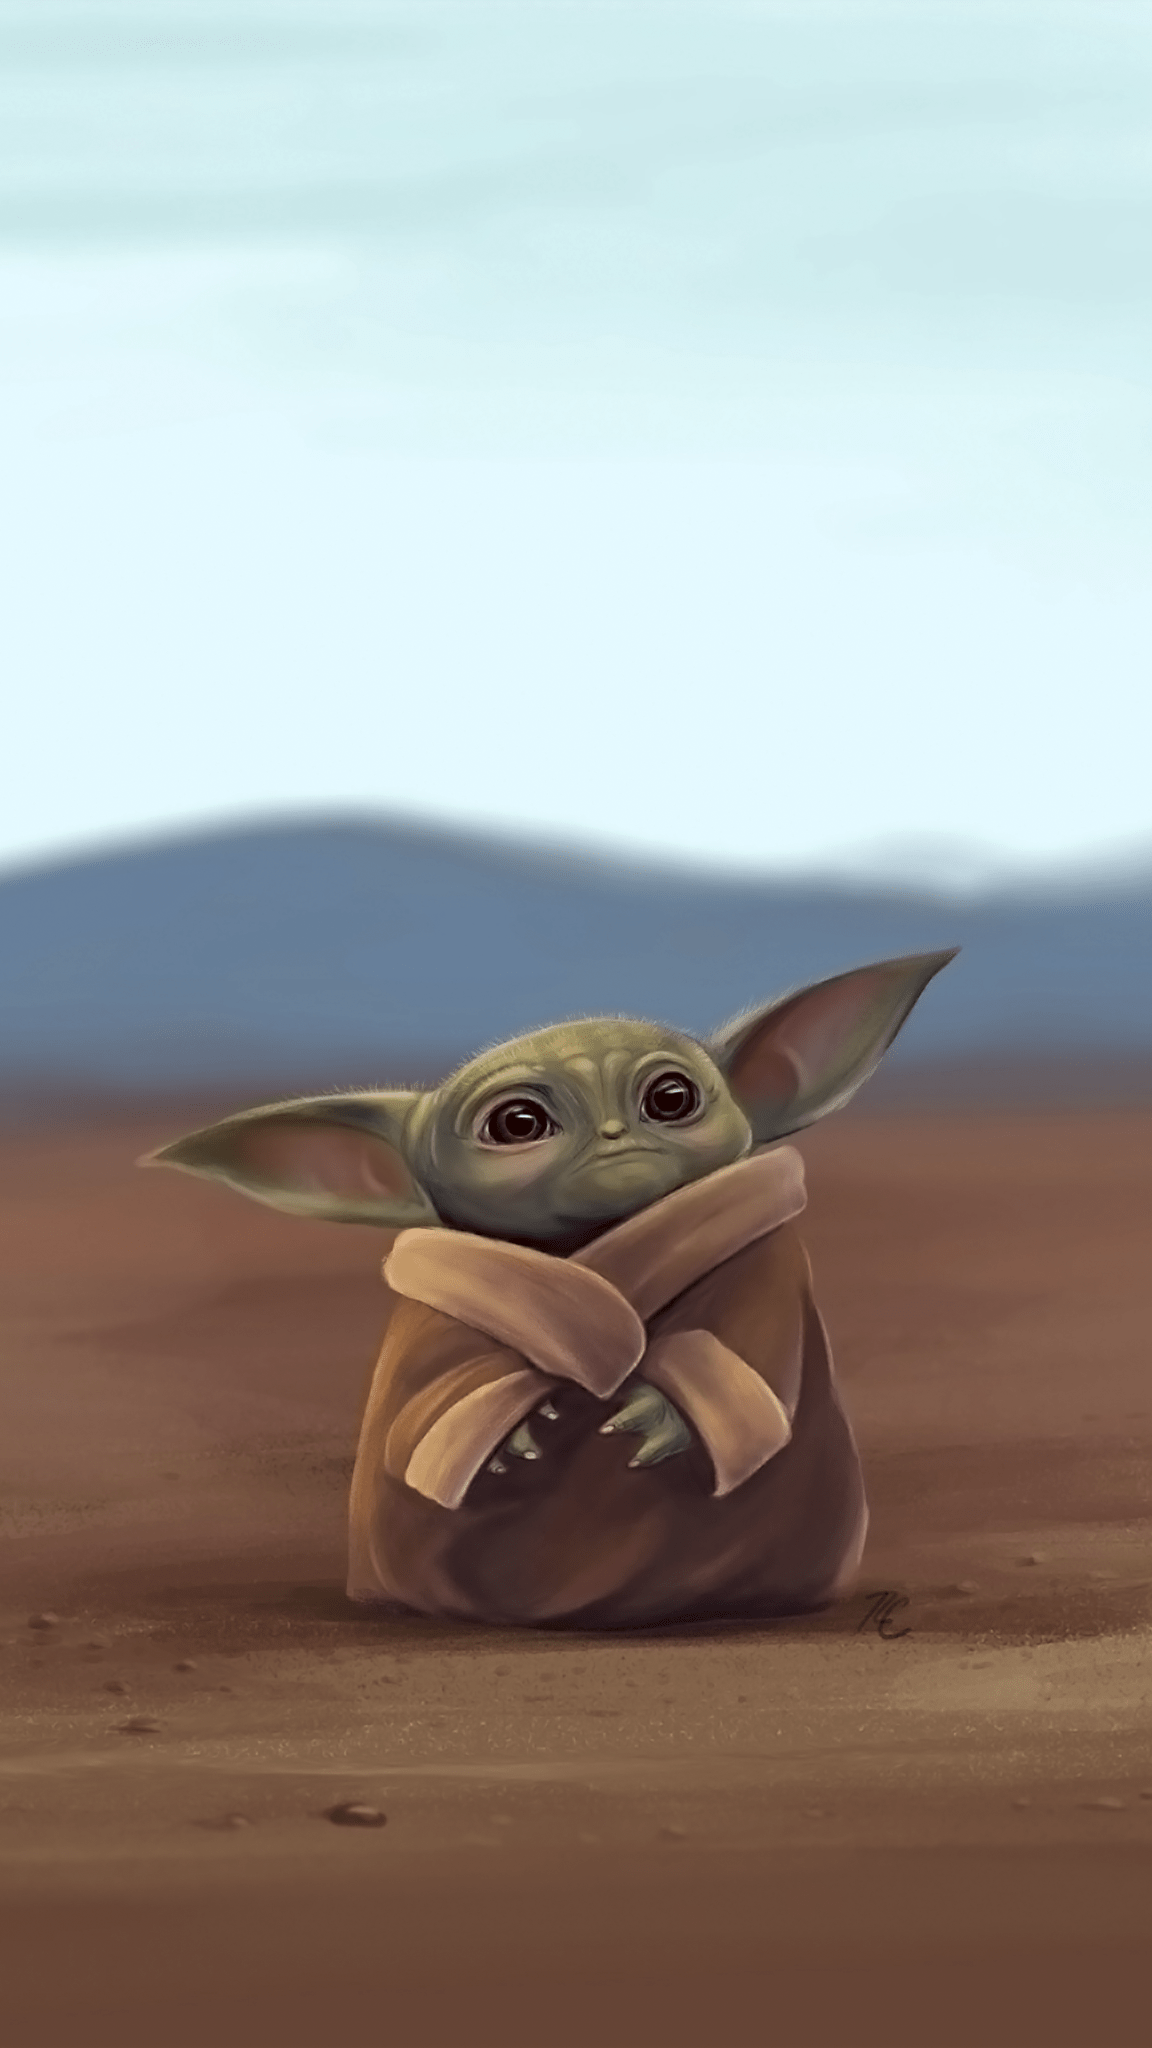 A Baby Yoda wallpaper I made for my phone - Baby Yoda